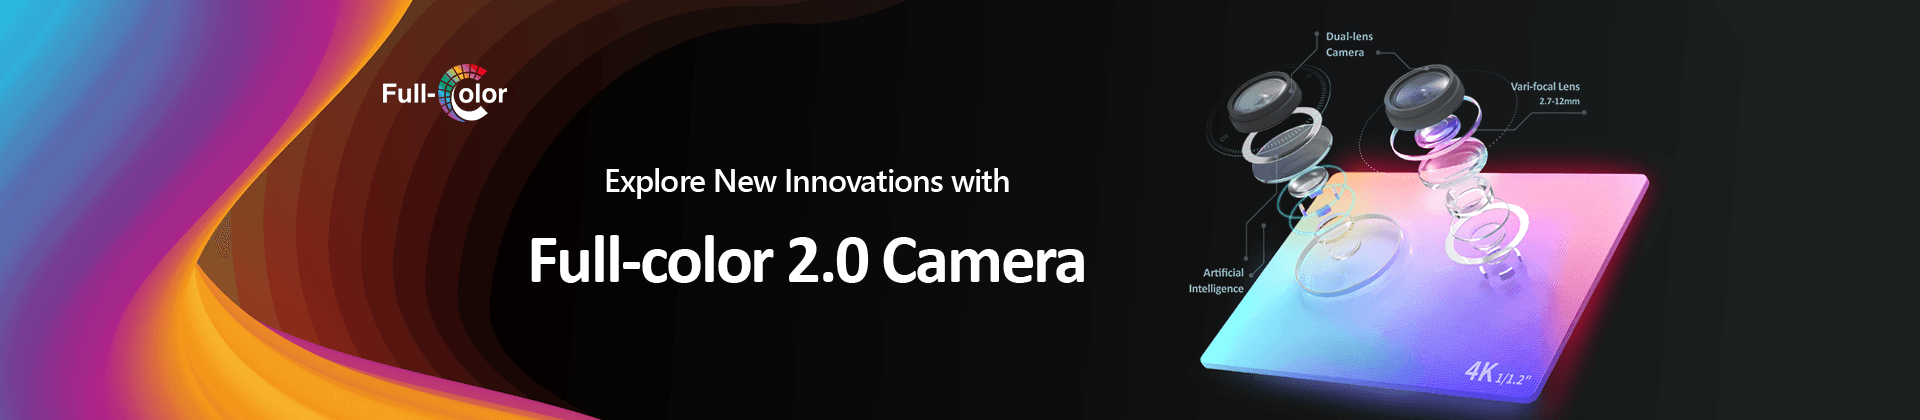 full colour 2.0 cameras